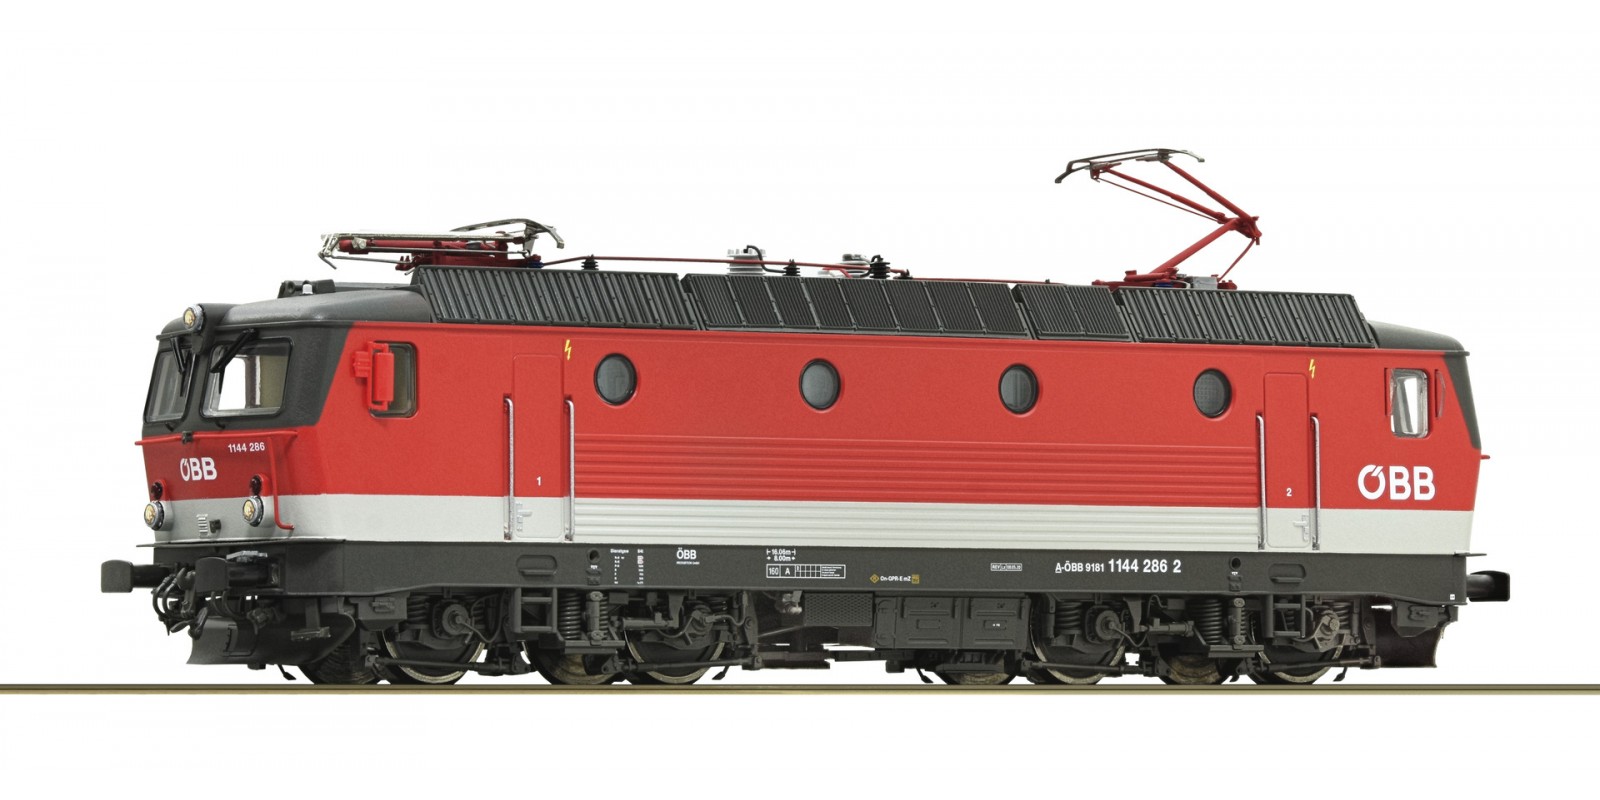 RO79547 Electric locomotive 1144 286-2, ÖBB